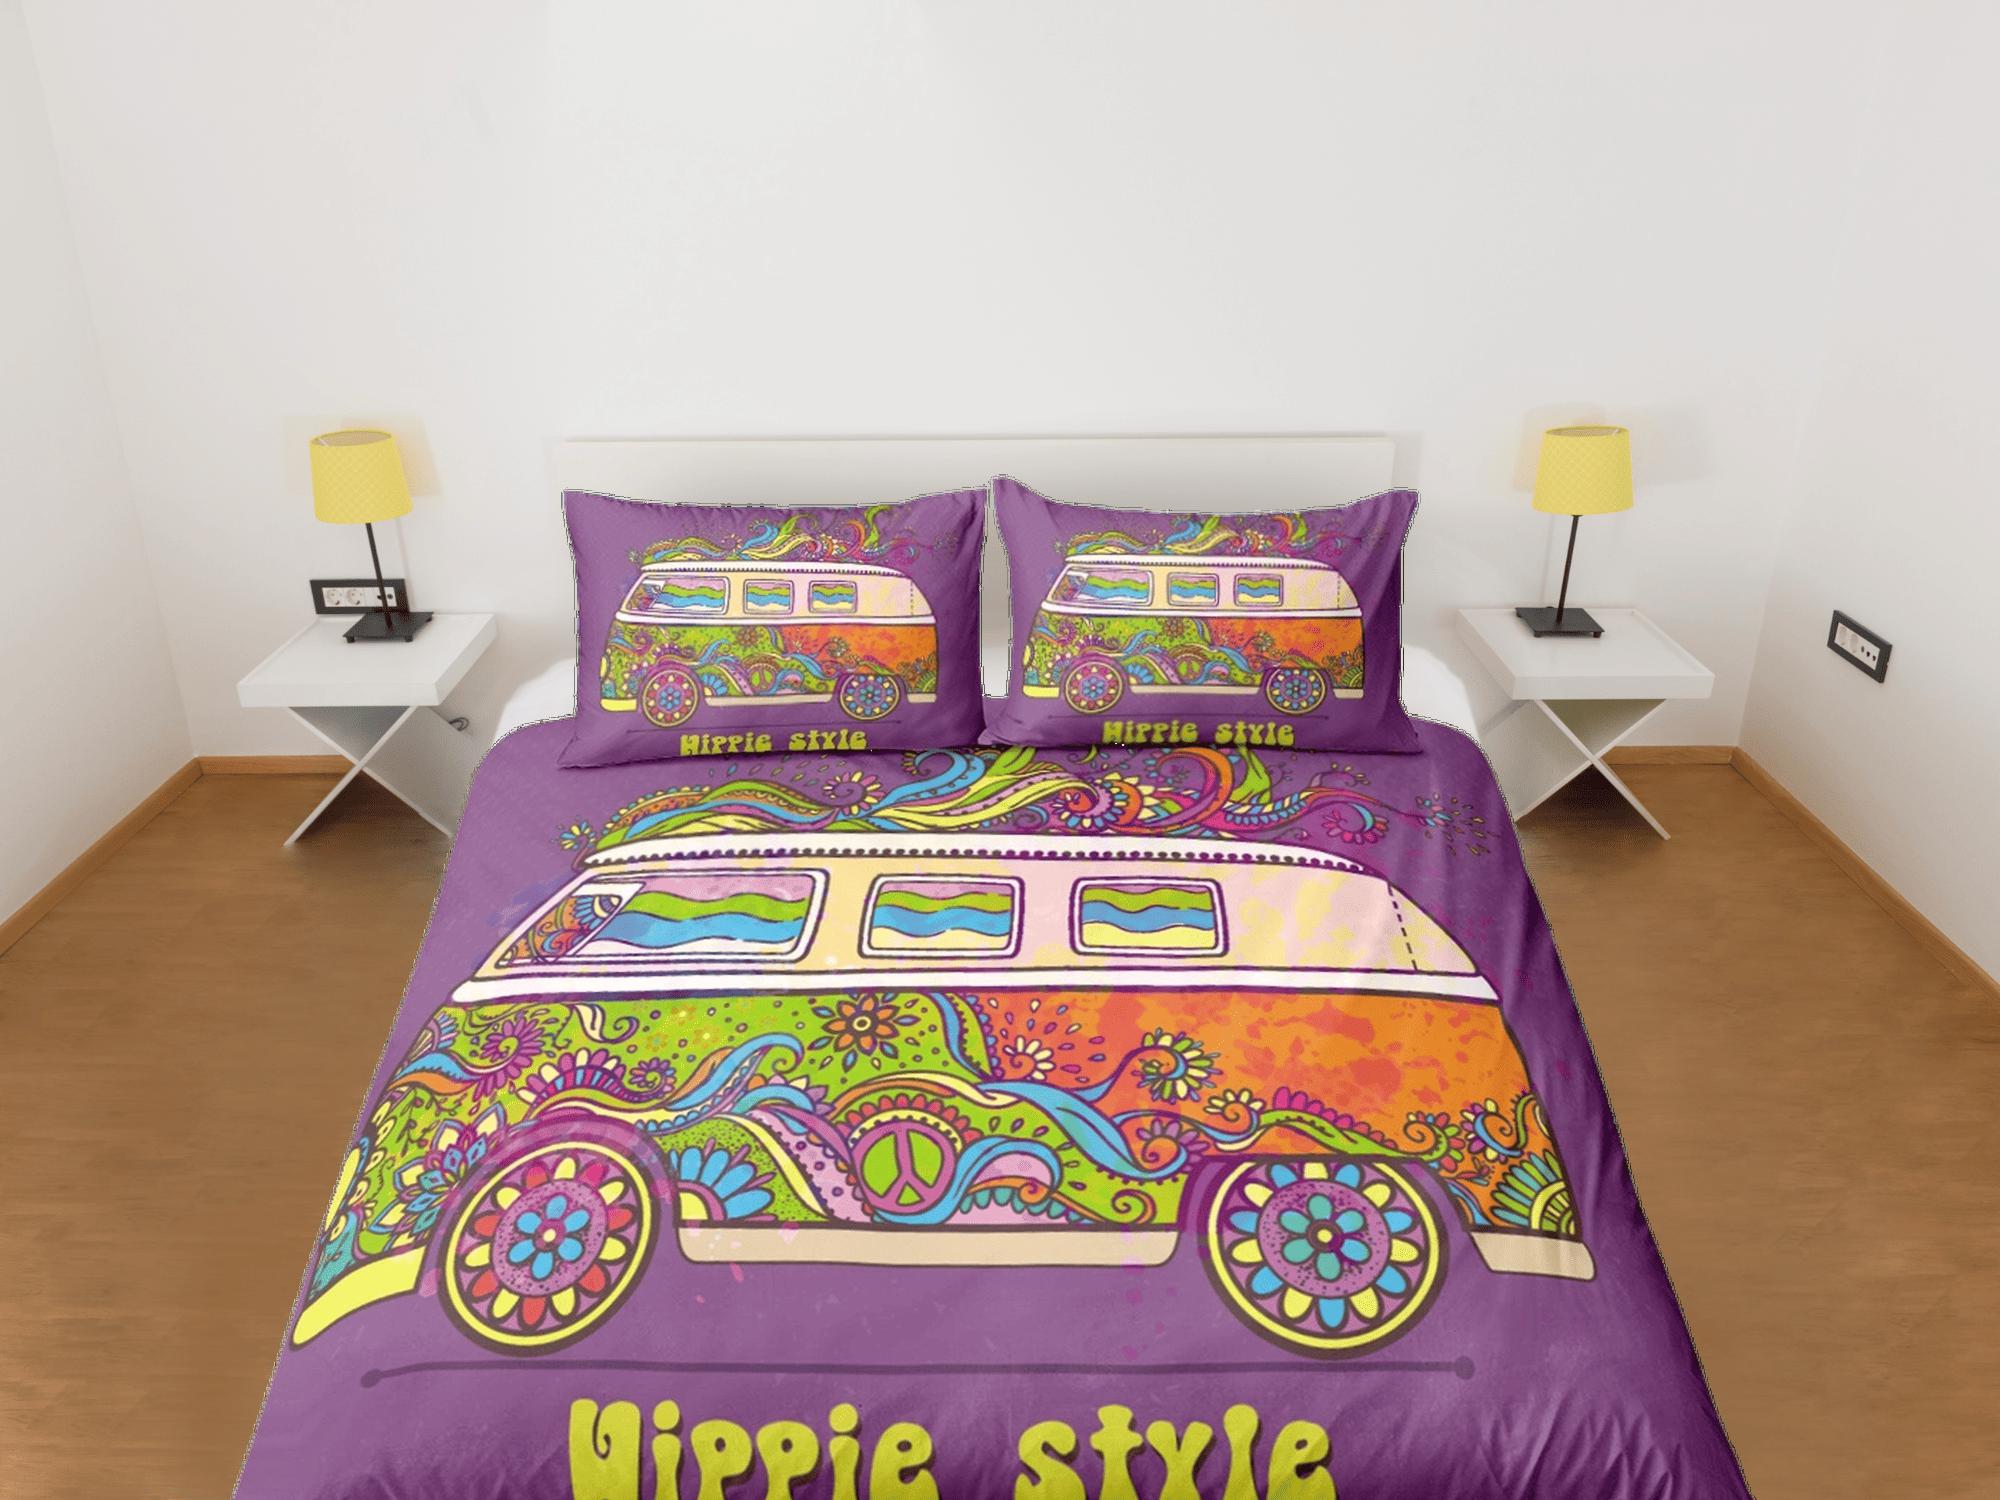 daintyduvet Hippie style colorful bus 90s nostalgia purple bedding retro duvet cover set, colorful bedding teens and adult duvet cover, maximalist decor